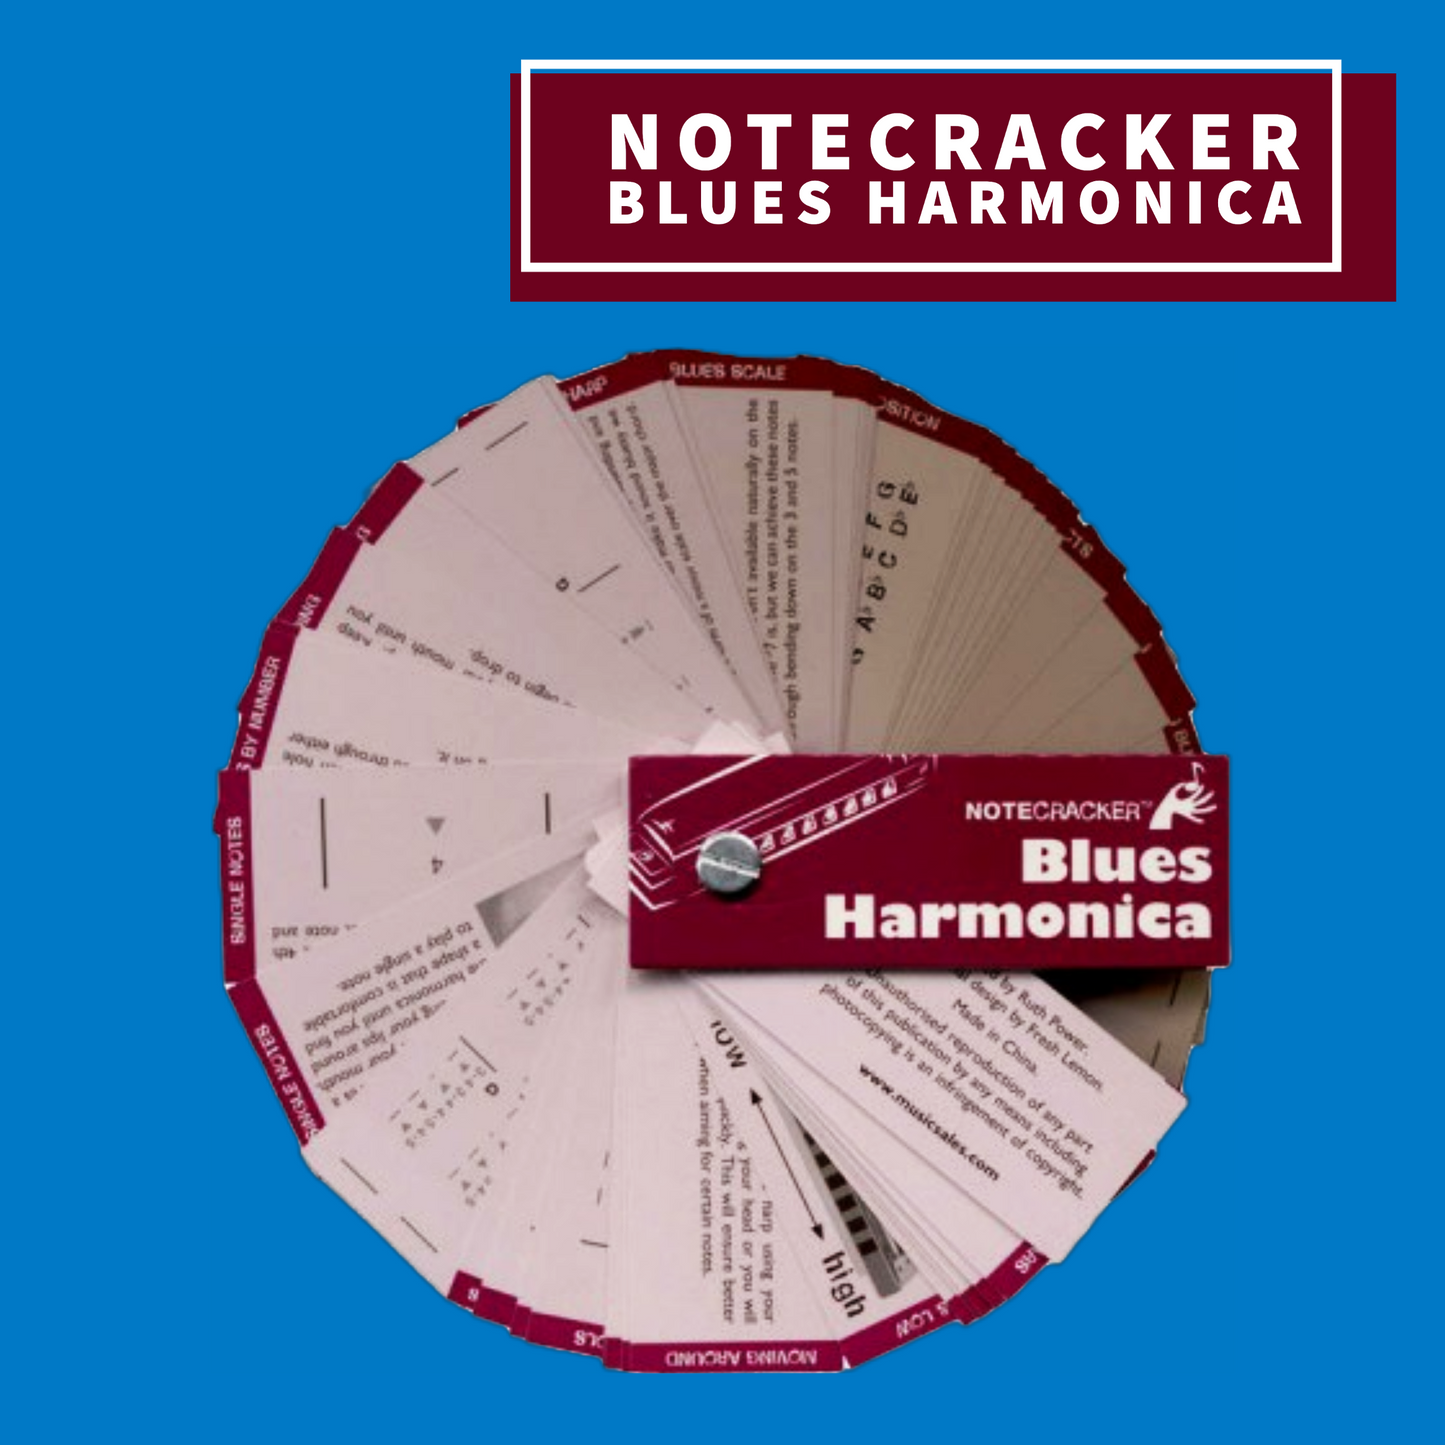 Notecracker Blues Harmonica - 70 Fun Learning Cards